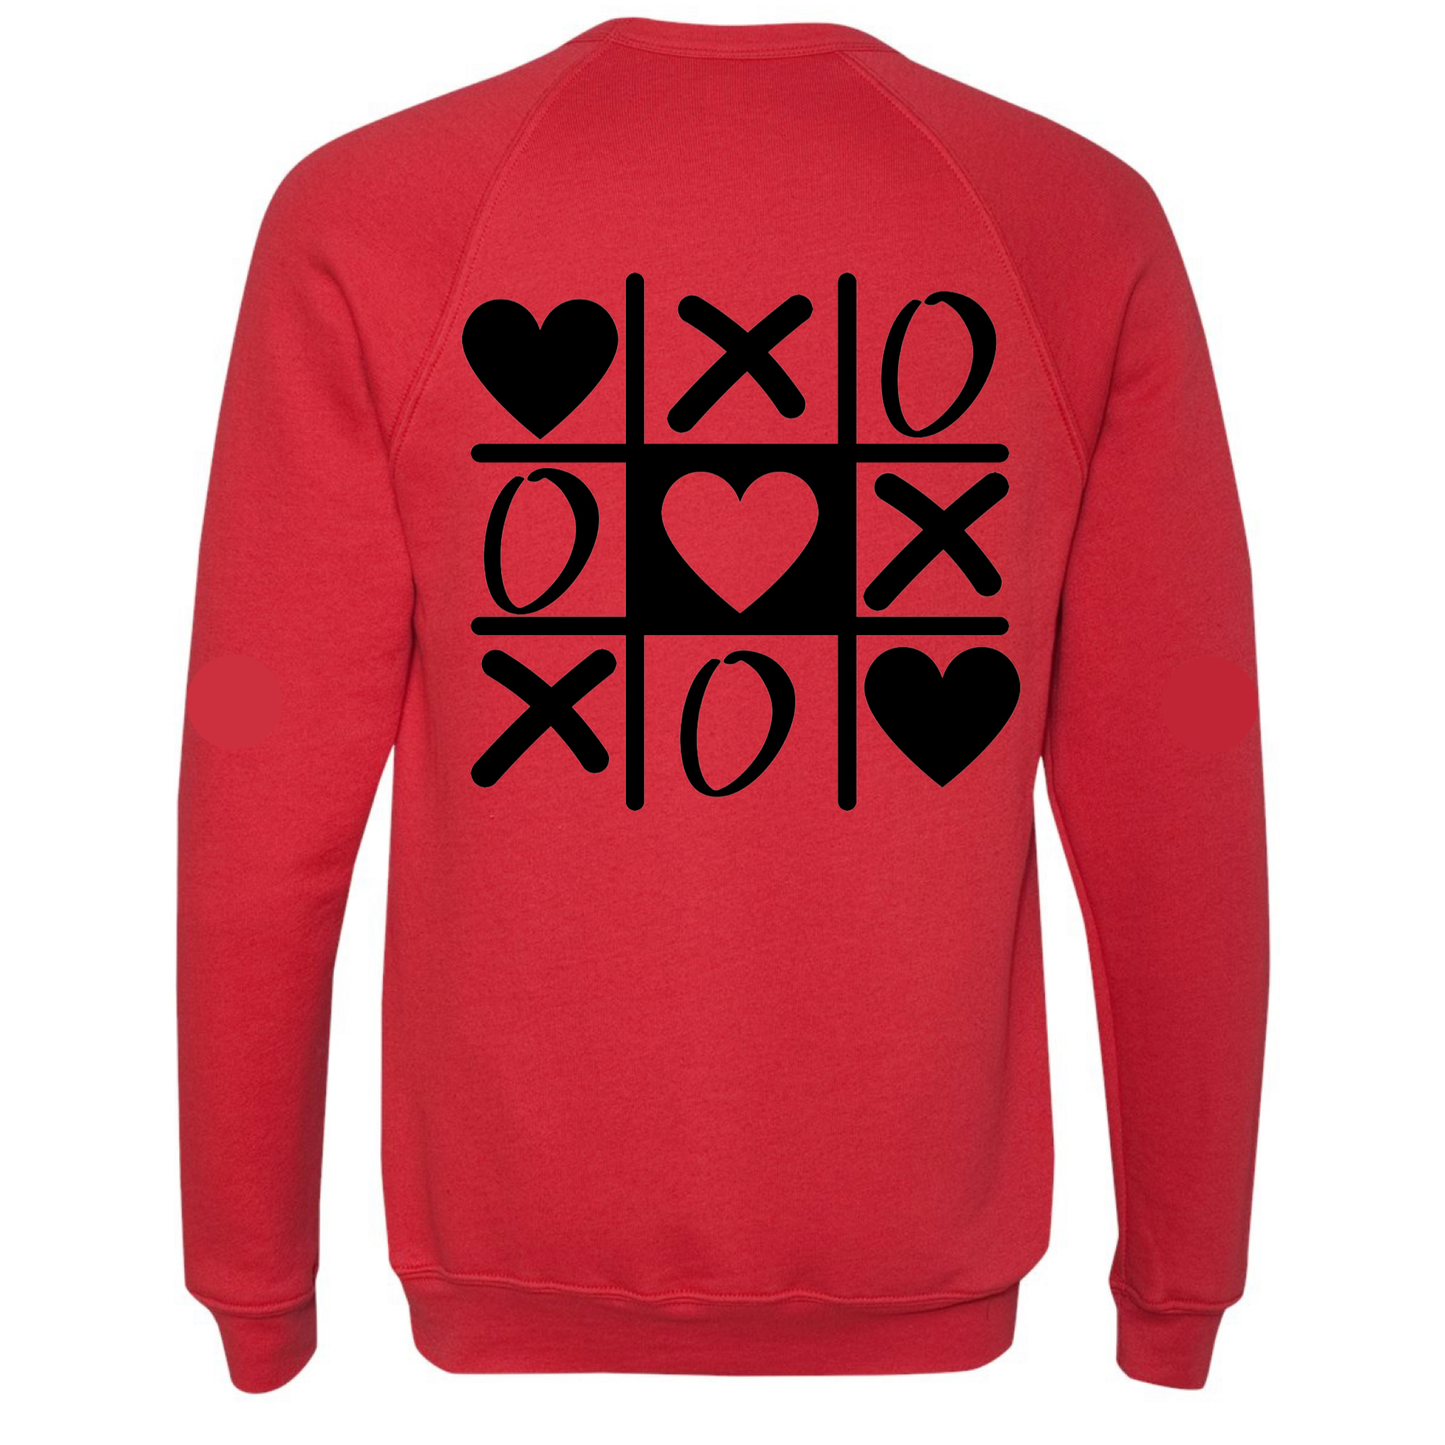 Love Always Wins Adult Sweatshirt